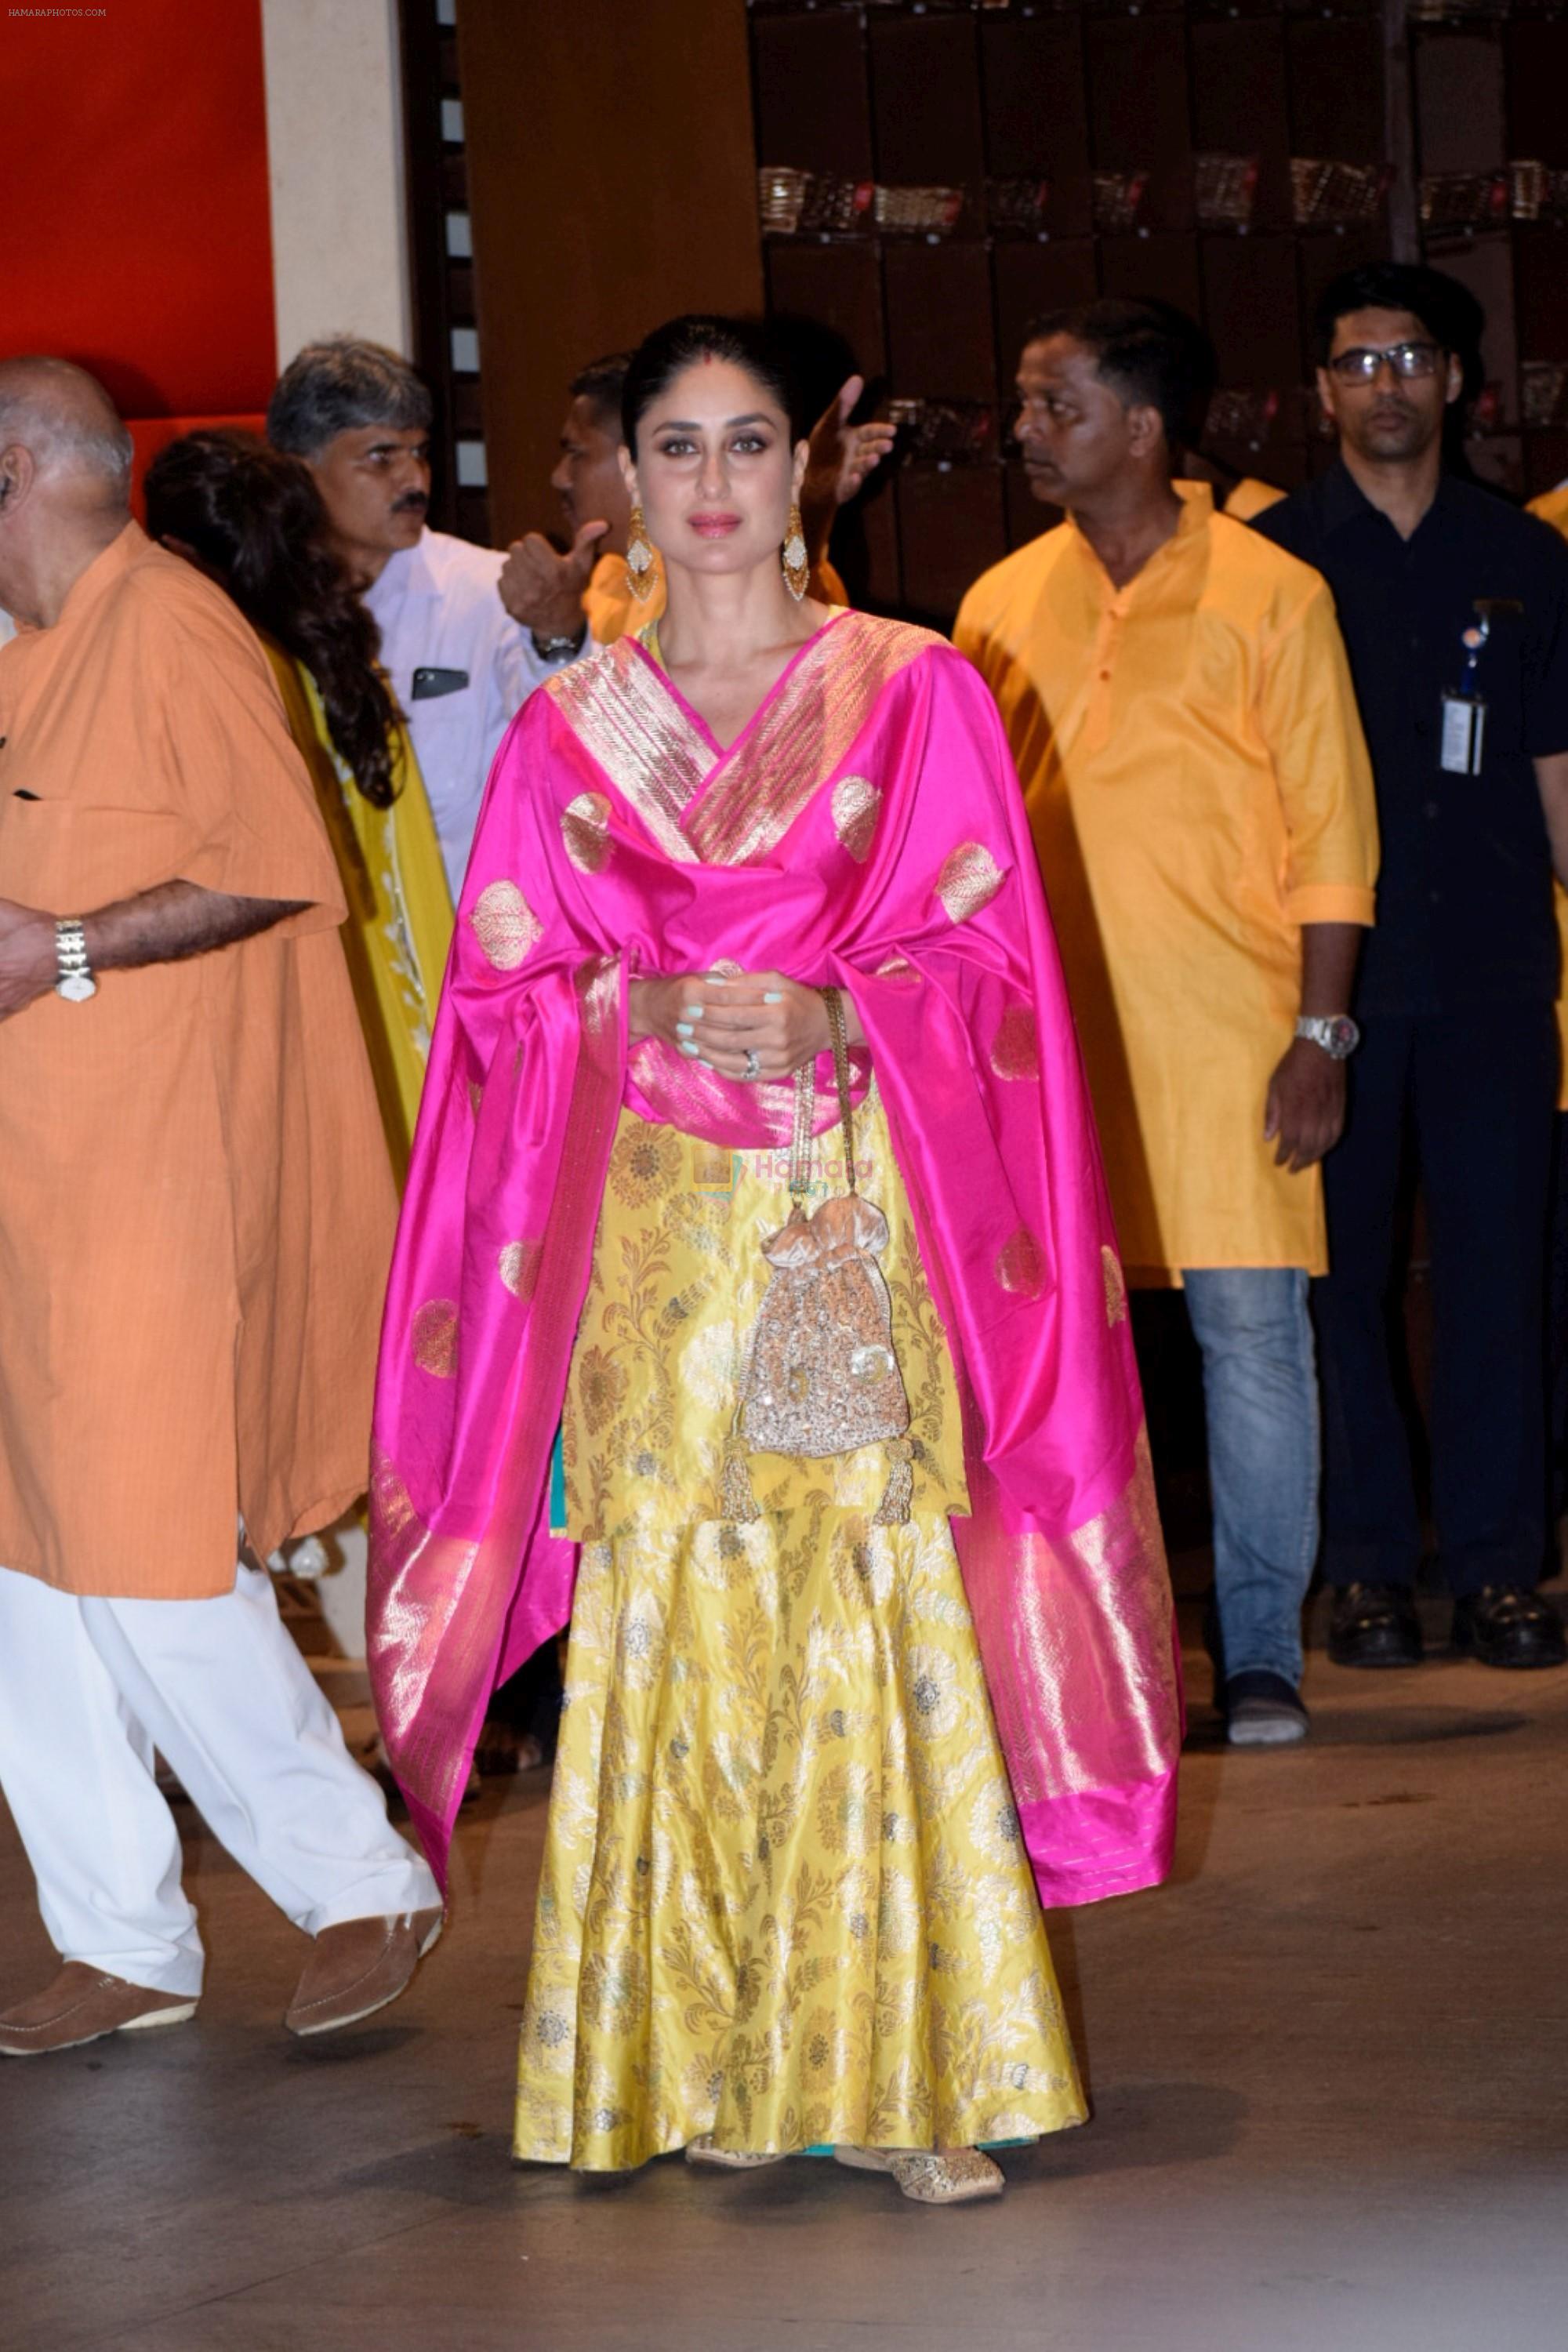 Kareena Kapoor at Mukesh Ambani's House For Ganesha Chaturthi on 13th Sept 2018